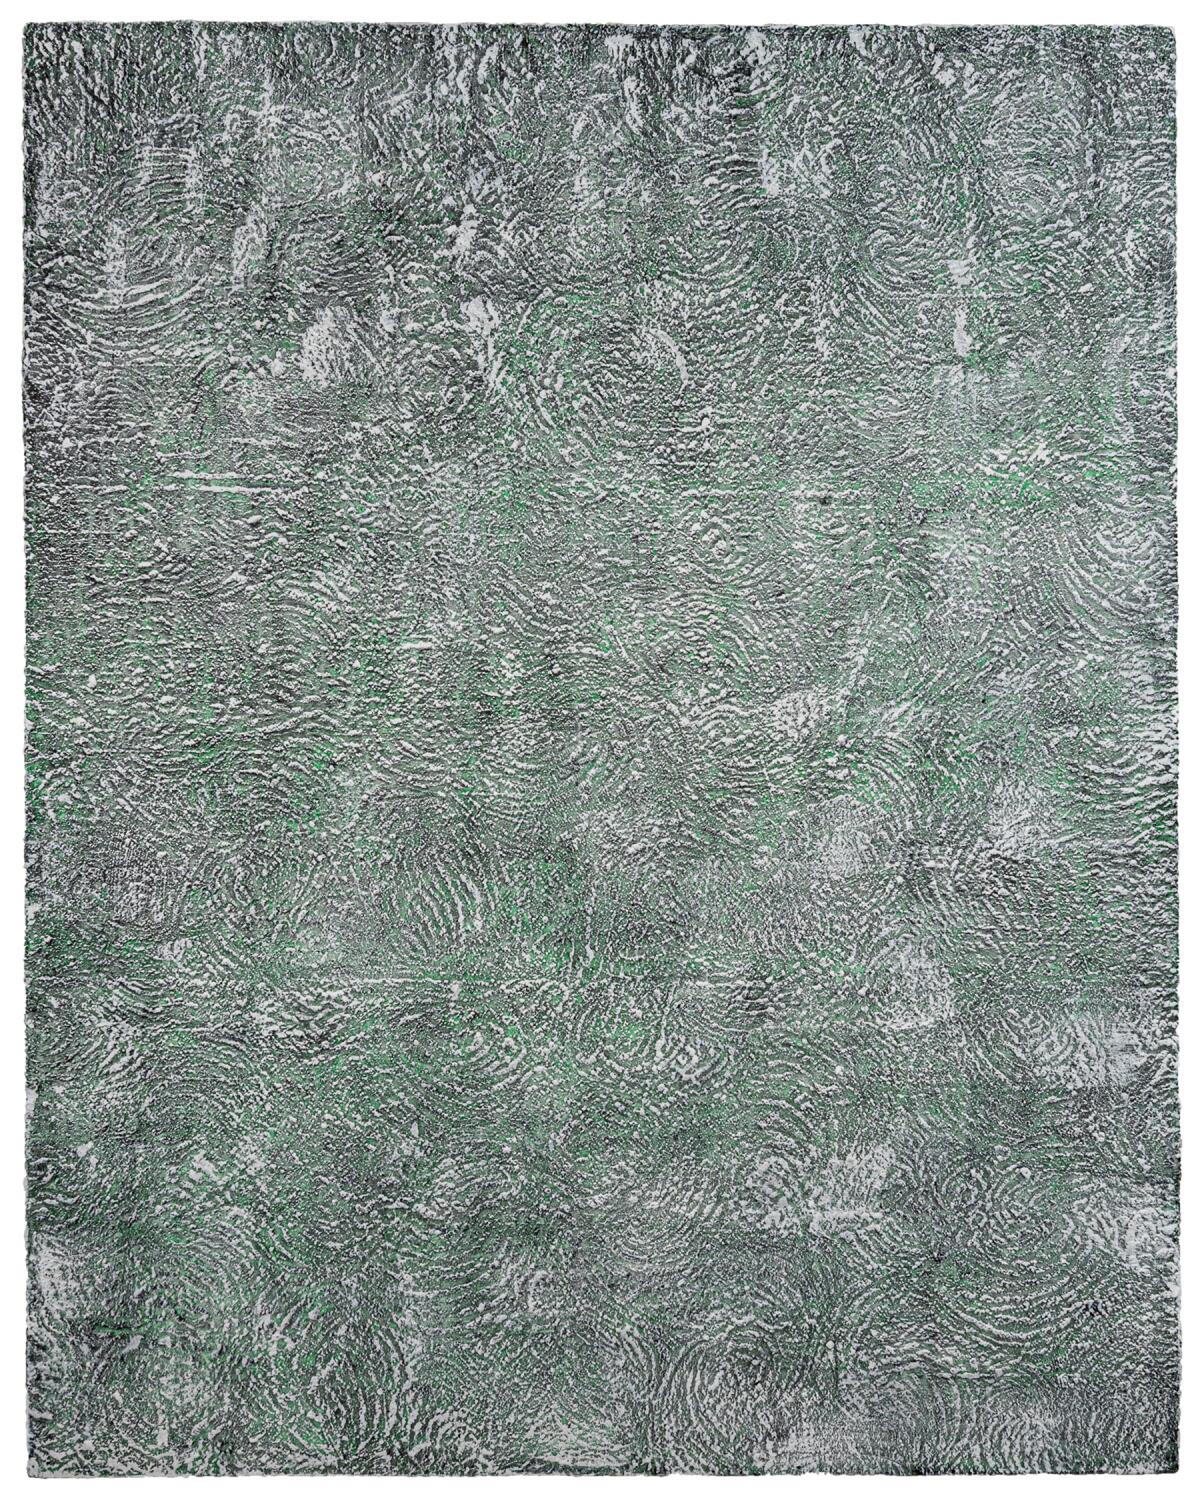 green-gray textured artwork 